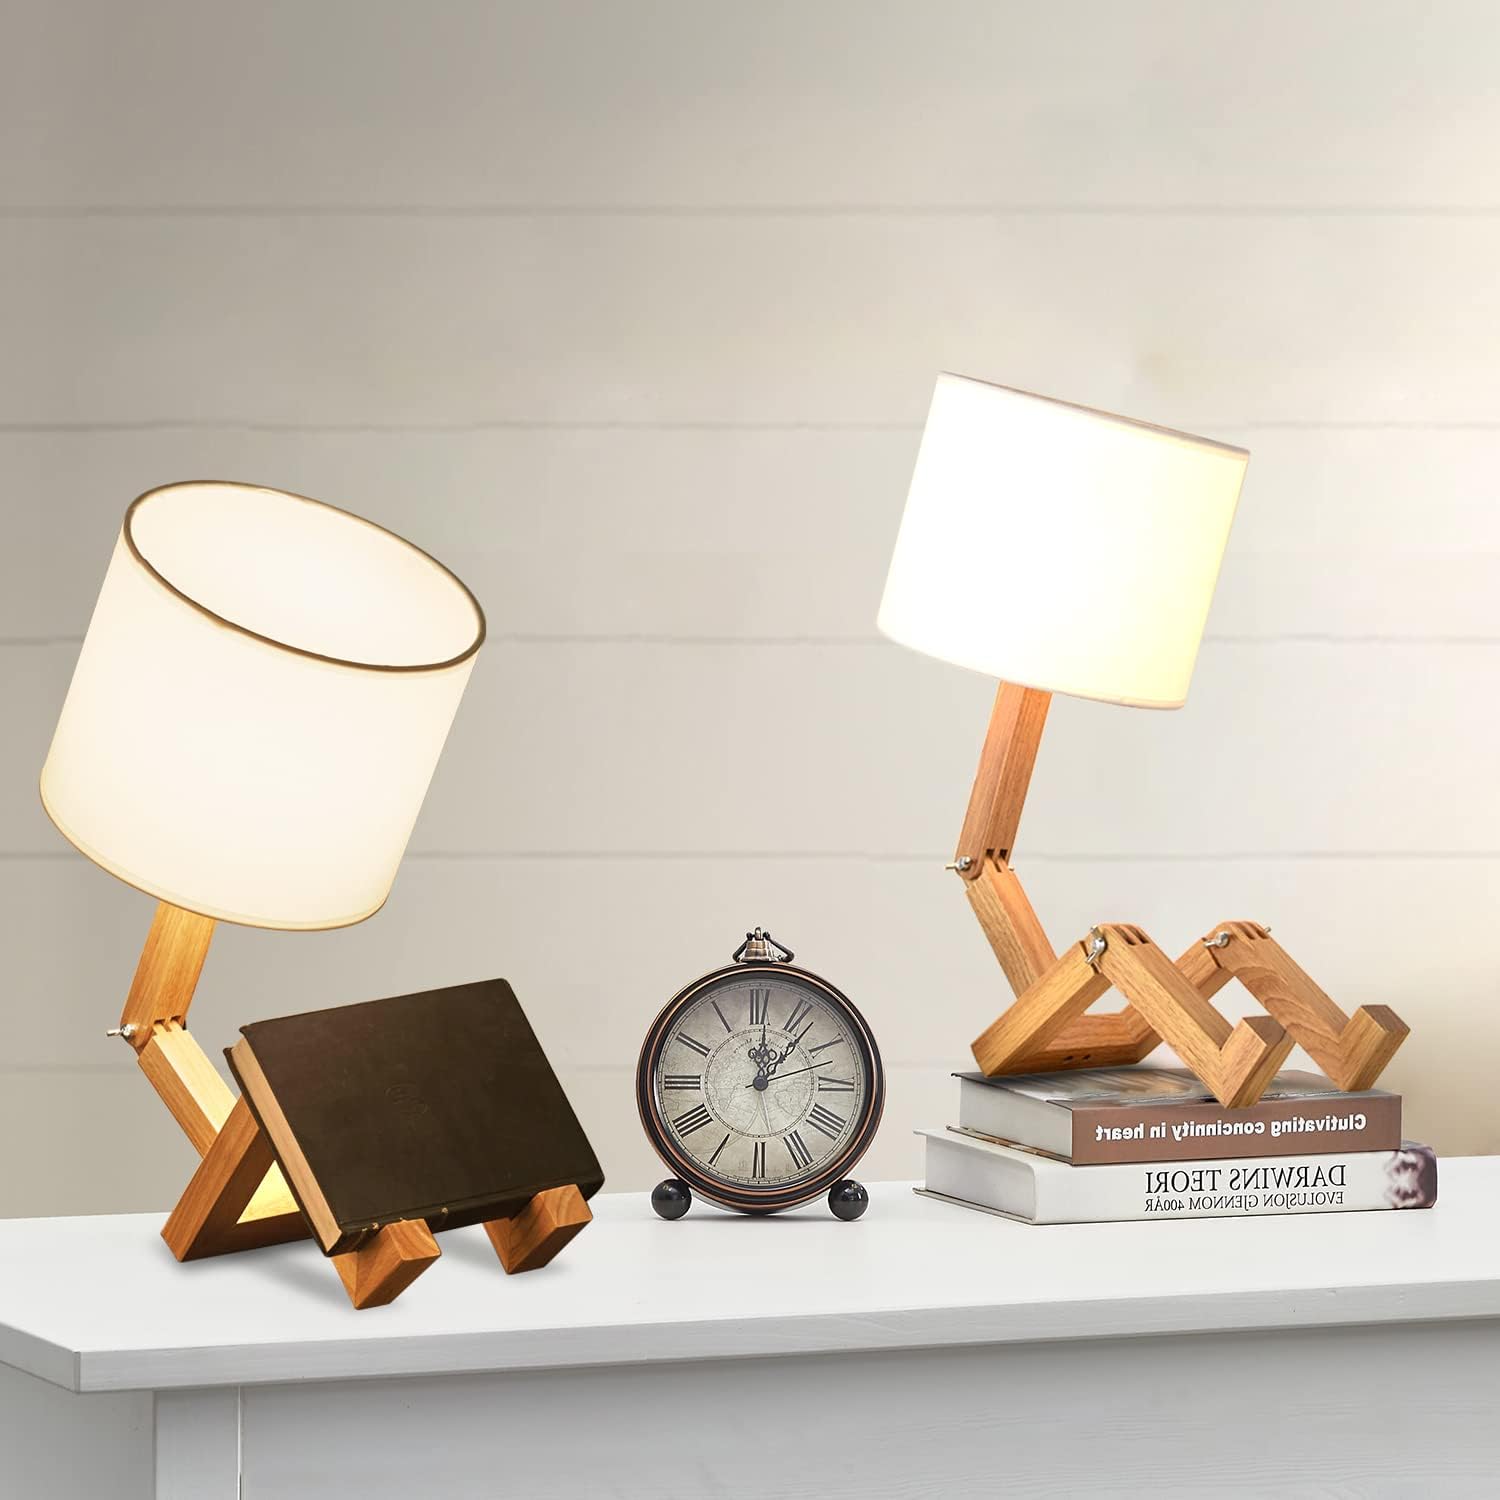 ELINKUME Robot Desk Lamp Set of 2, Creative Bedside Lamp for Bedroom,Wooden Lamp Body Adjustable,DIY E26 Living Room Table Lamps with Fabric Shade,Modern Indoor Decorative Lighting